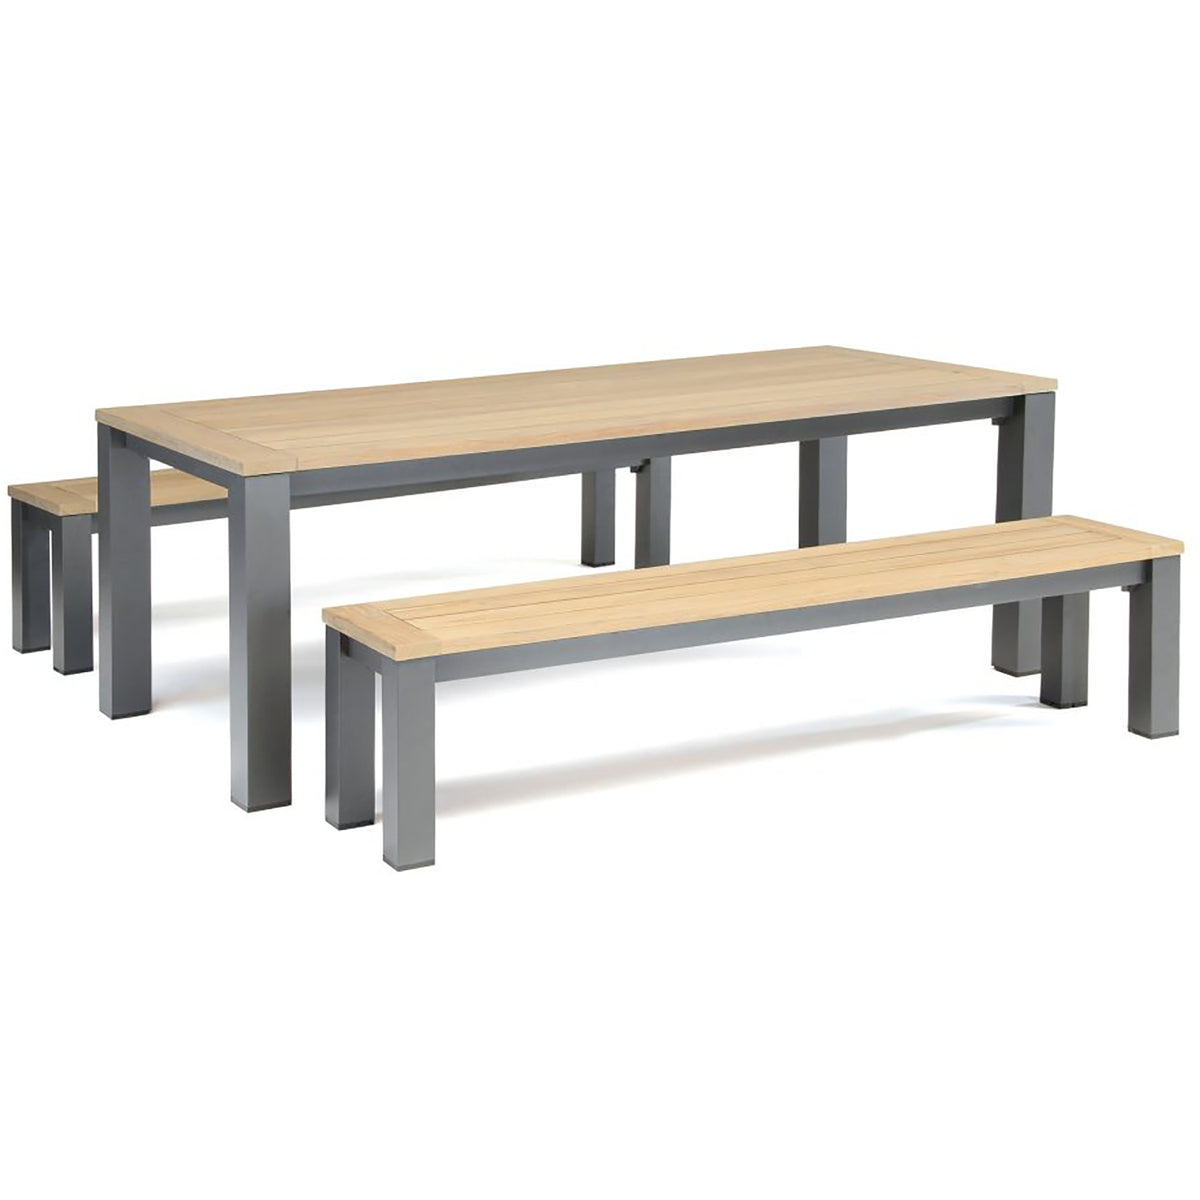 Kettler Elba Signature Teak And Aluminium Rectangular Bench Set 2.2m x 1m